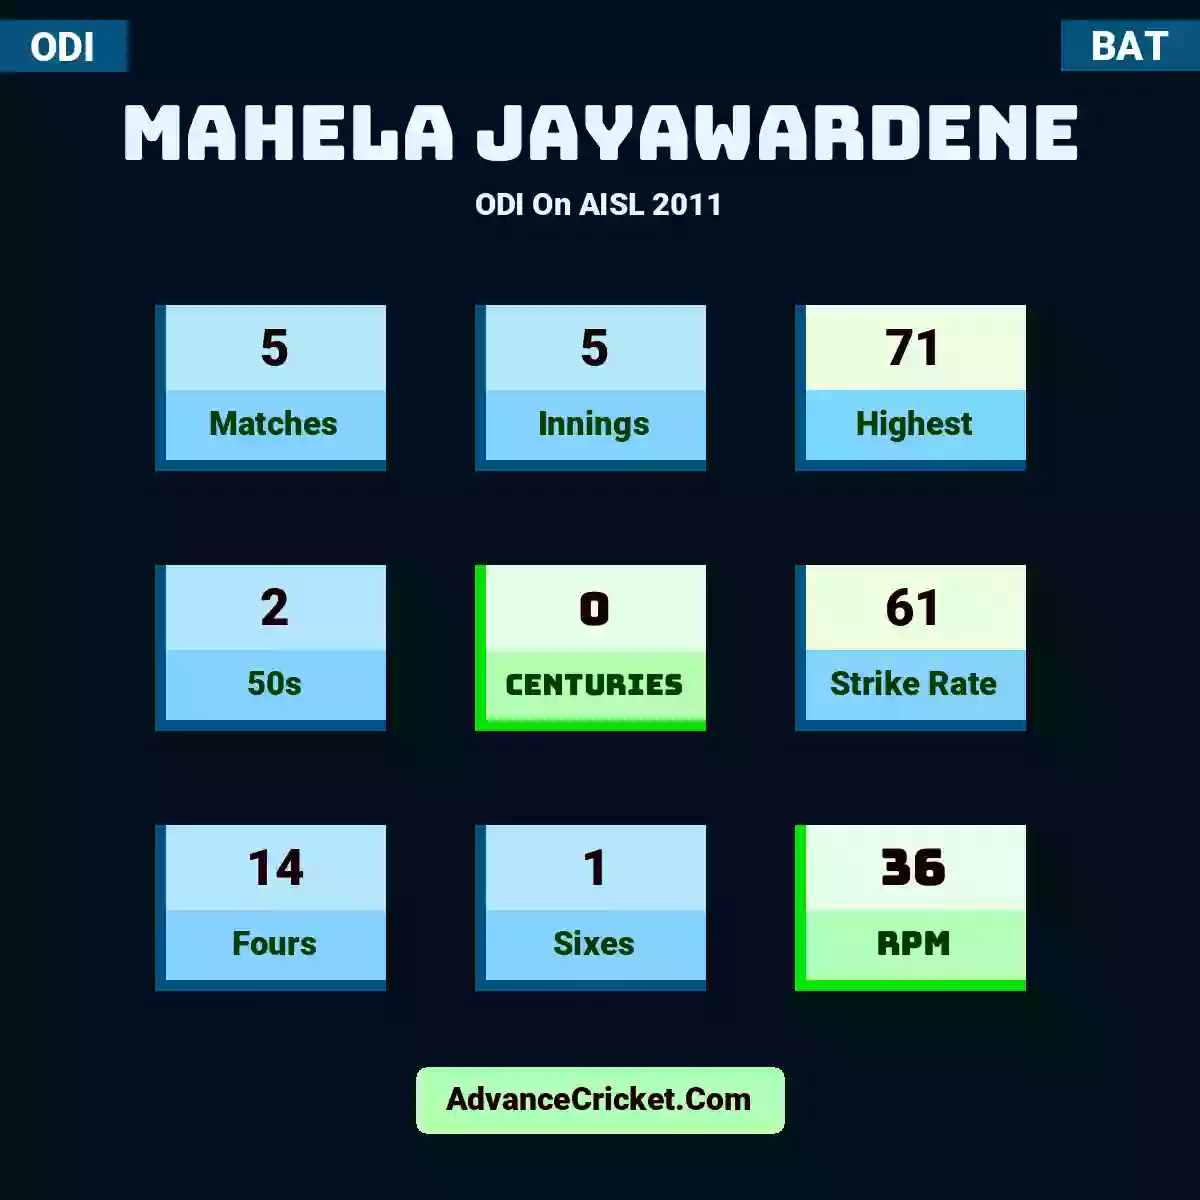 Mahela Jayawardene ODI  On AISL 2011, Mahela Jayawardene played 5 matches, scored 71 runs as highest, 2 half-centuries, and 0 centuries, with a strike rate of 61. M.Jayawardene hit 14 fours and 1 sixes, with an RPM of 36.